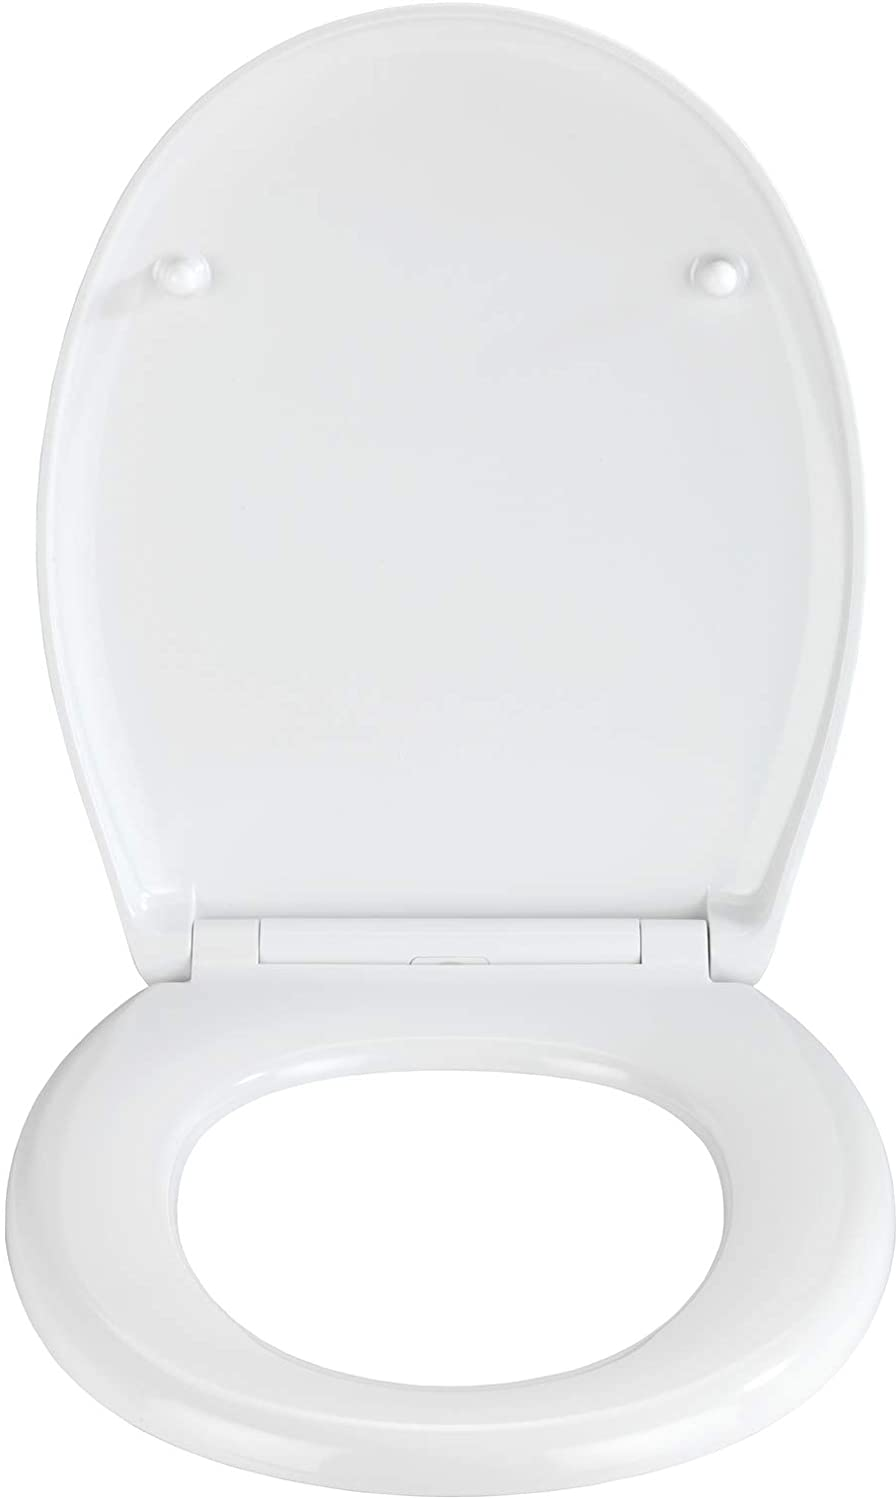 WC-Sitz Mod. Stream, Easy Close Duroplast 44.5 x 37 x 0.1 cm